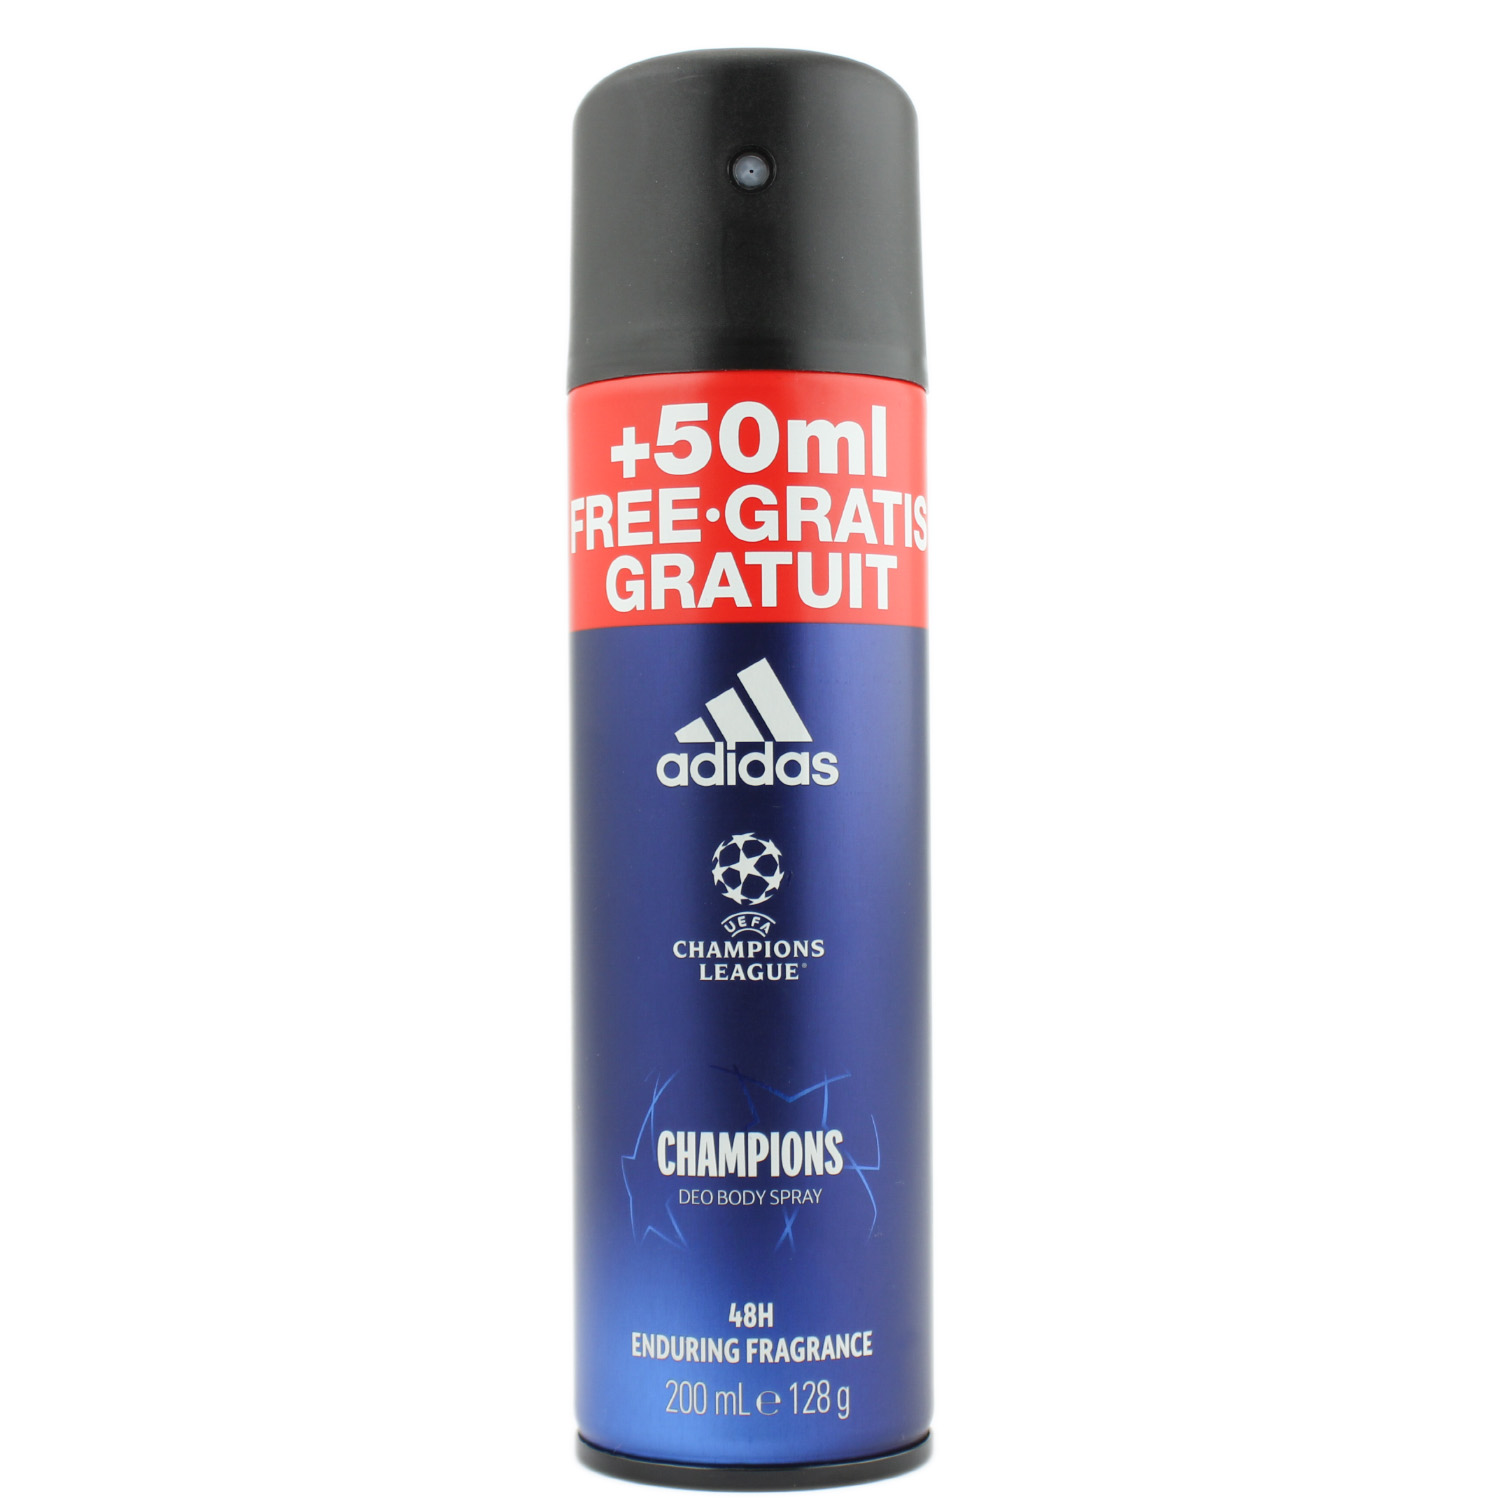 Adidas UEFA VIII Champions League Champions 48H Deodorant Body Spray 150ml + 50ml GRATIS